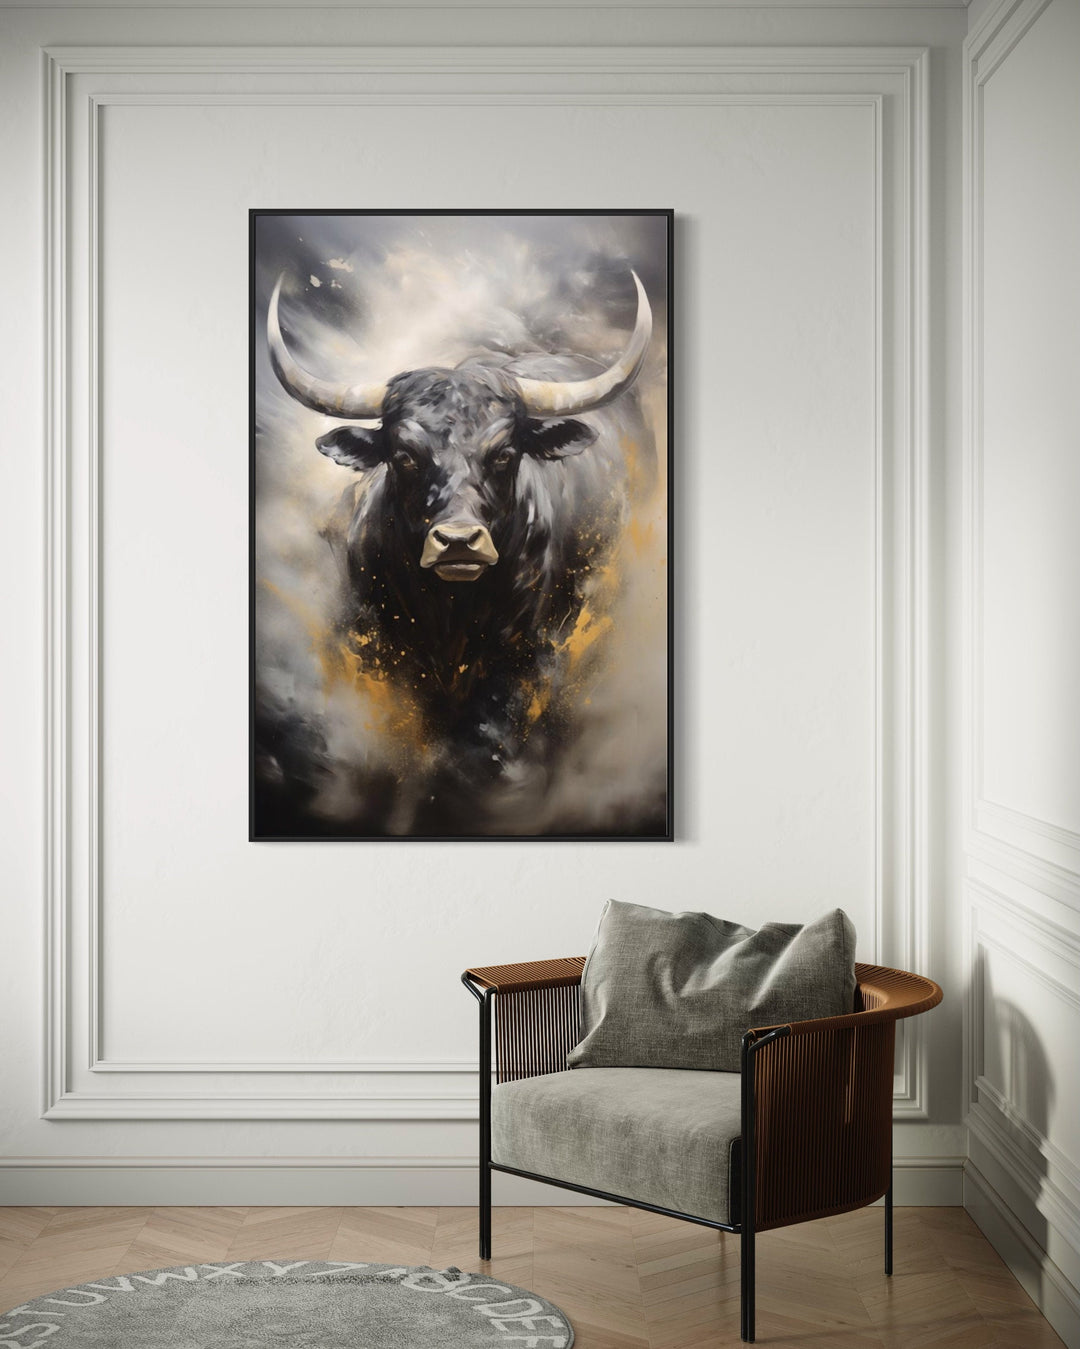 Abstract Running Black Bull Wall Art behind a chair